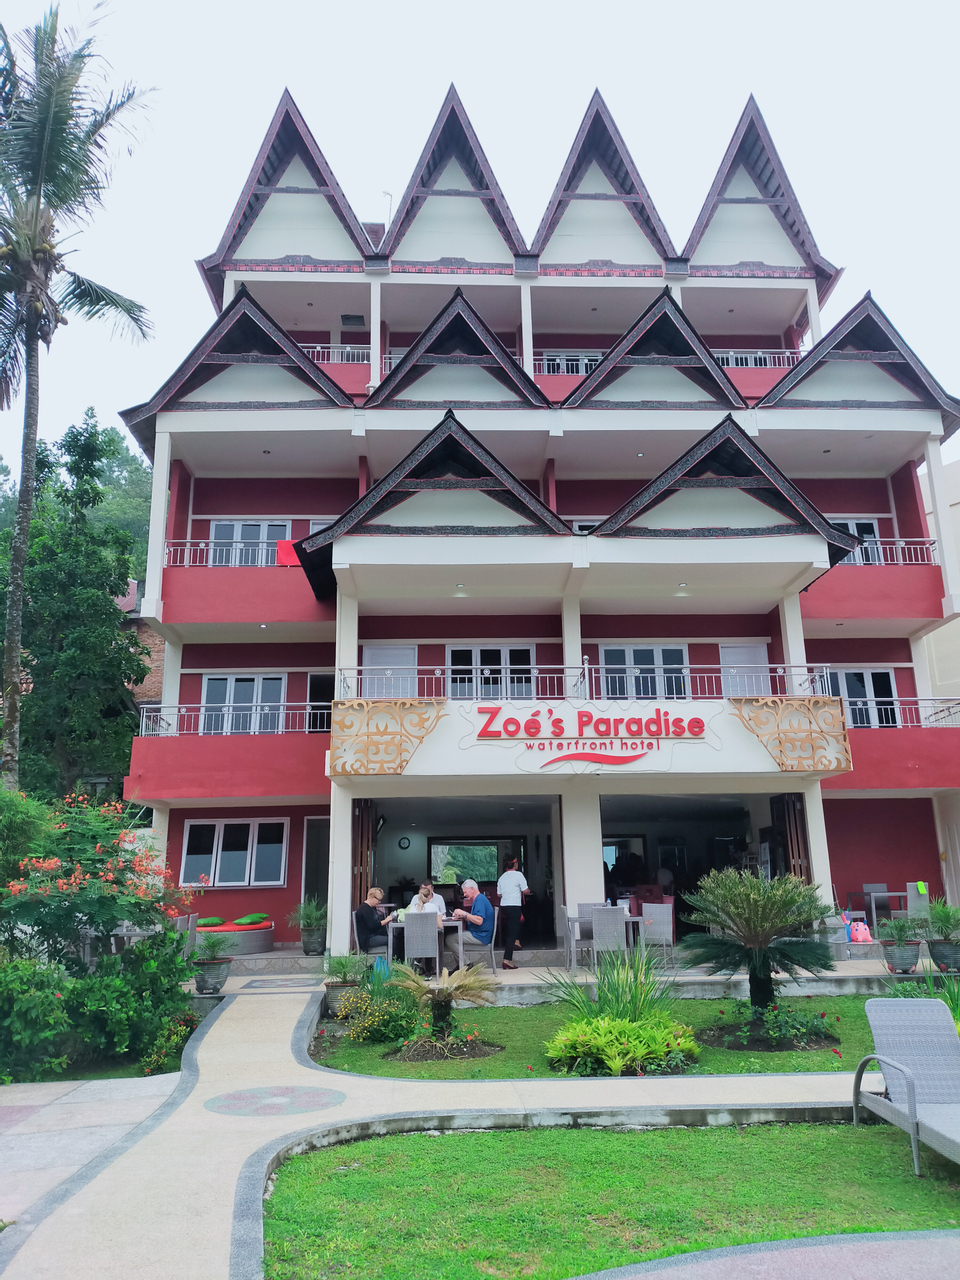 Zoe's Paradise Waterfront Hotel, Samosir